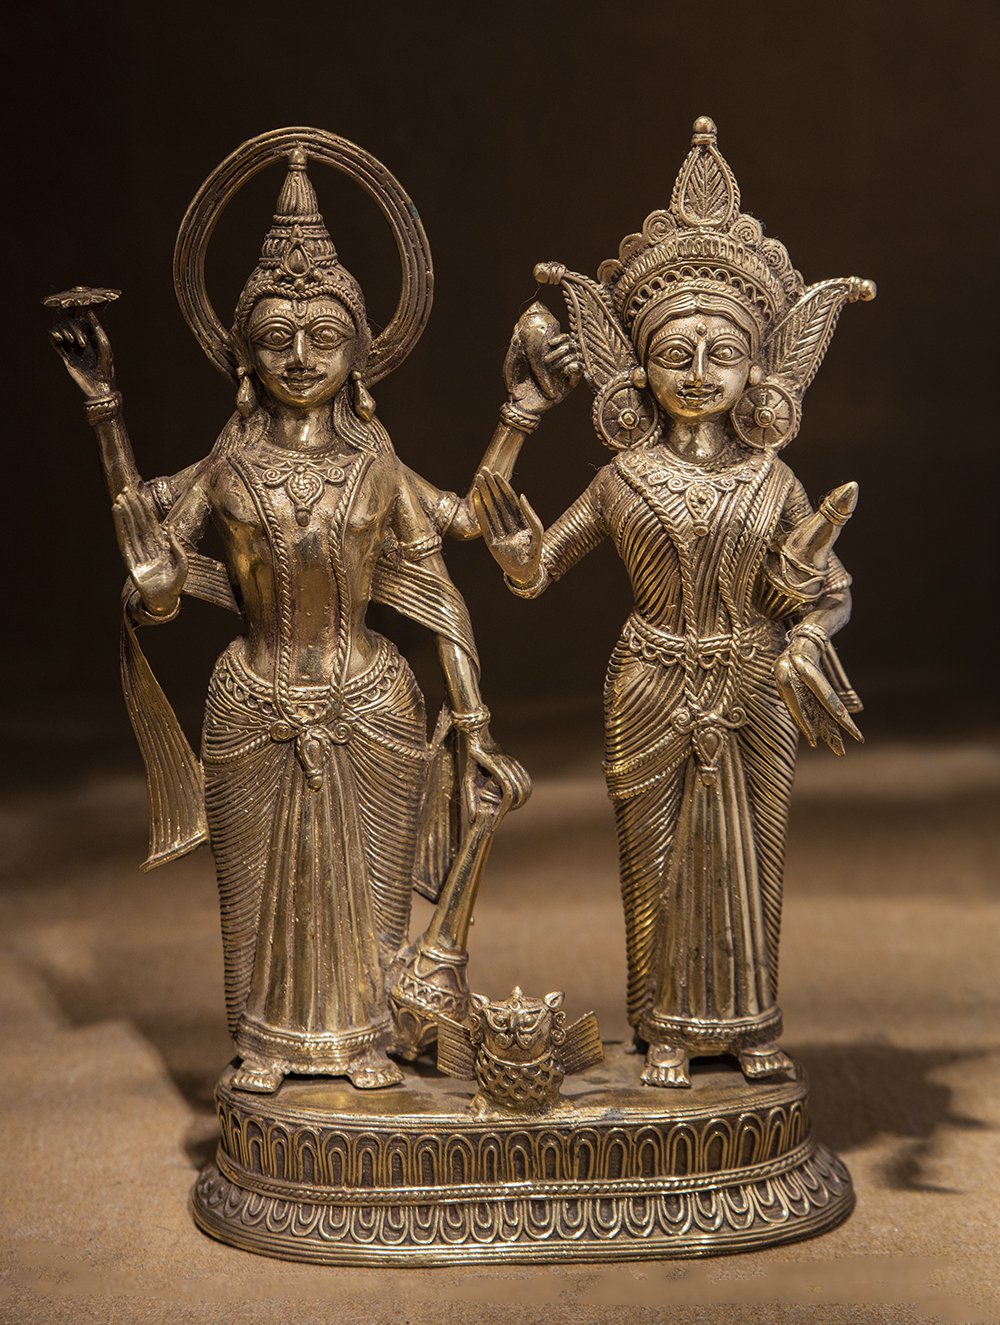 Load image into Gallery viewer, Large Dhokra Craft Curio - Vishnu Lakshmi